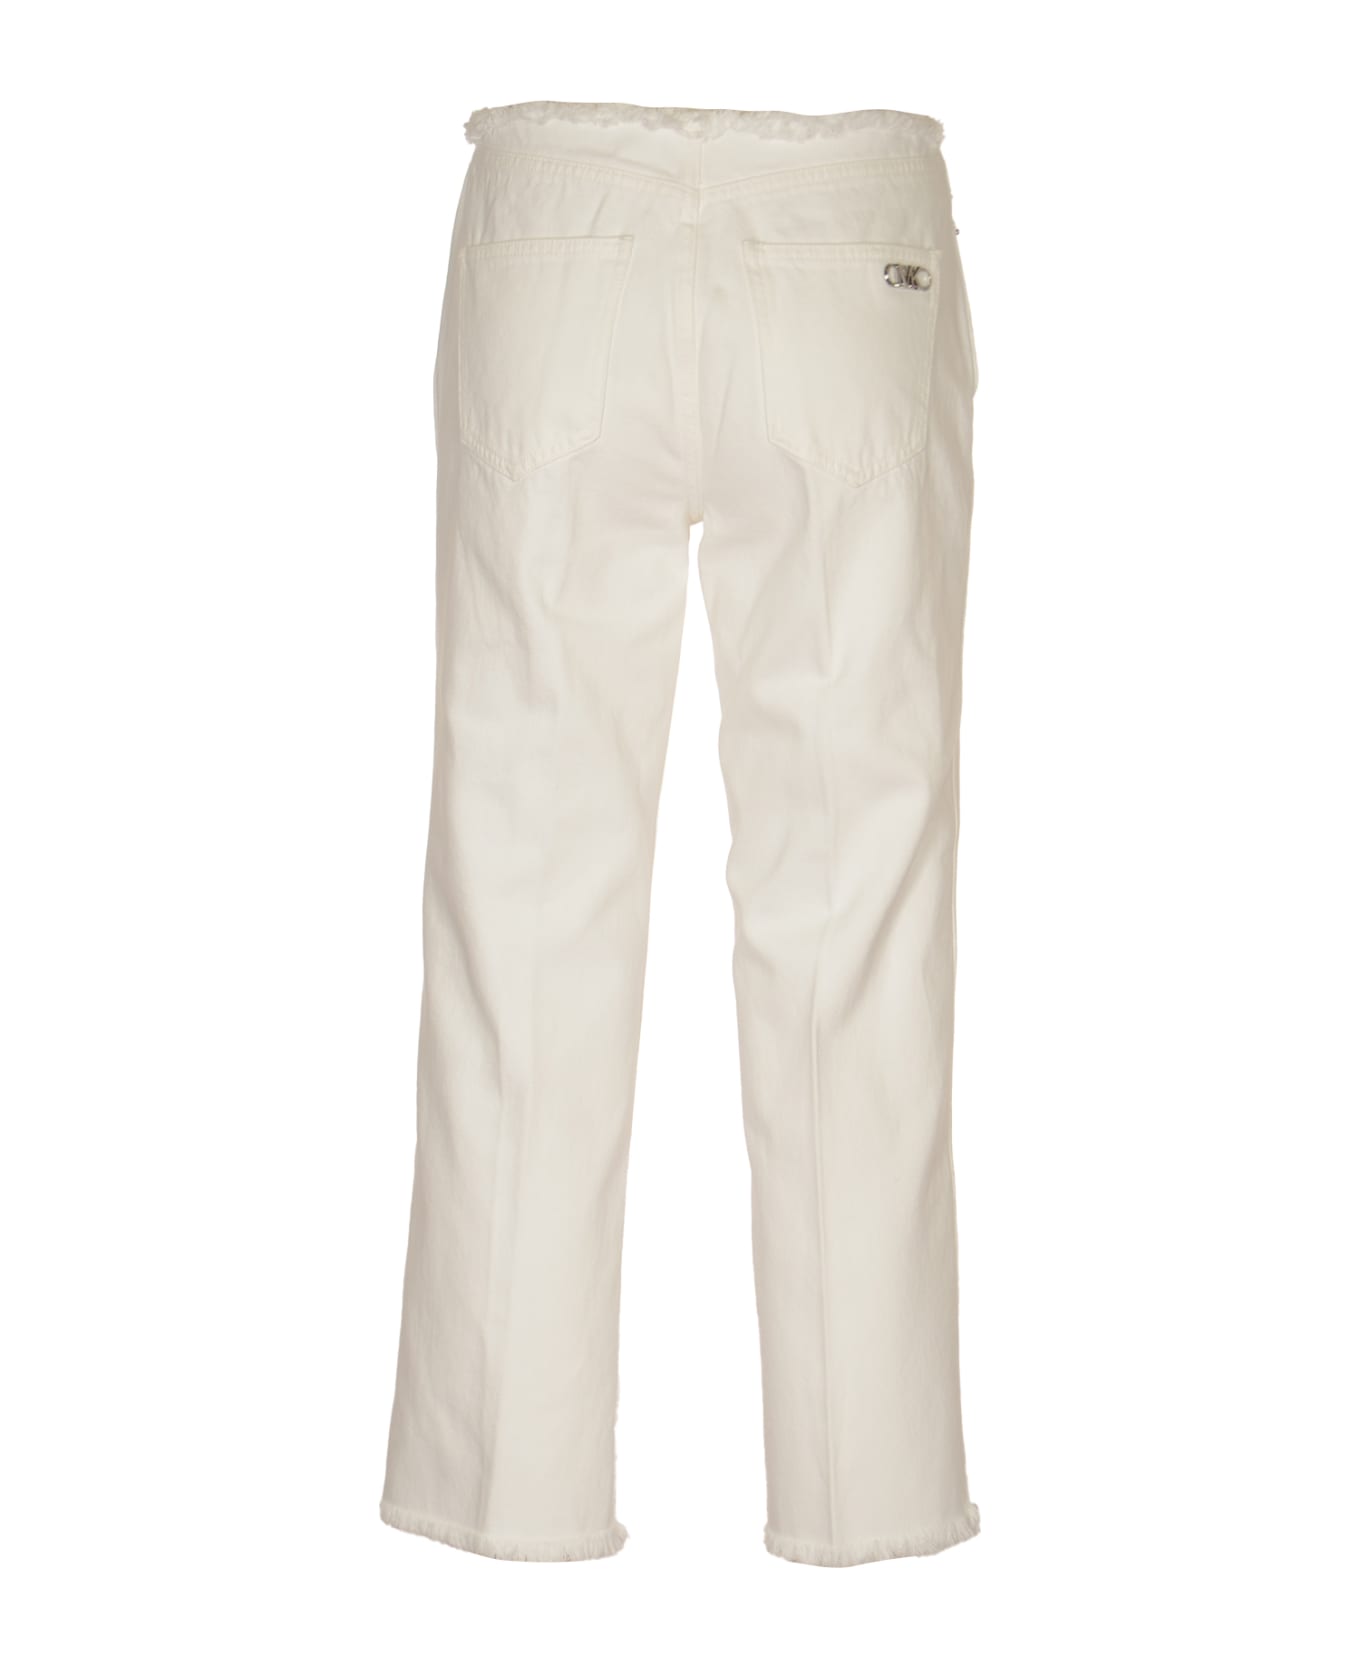 Michael Kors White Jeans - Optic White